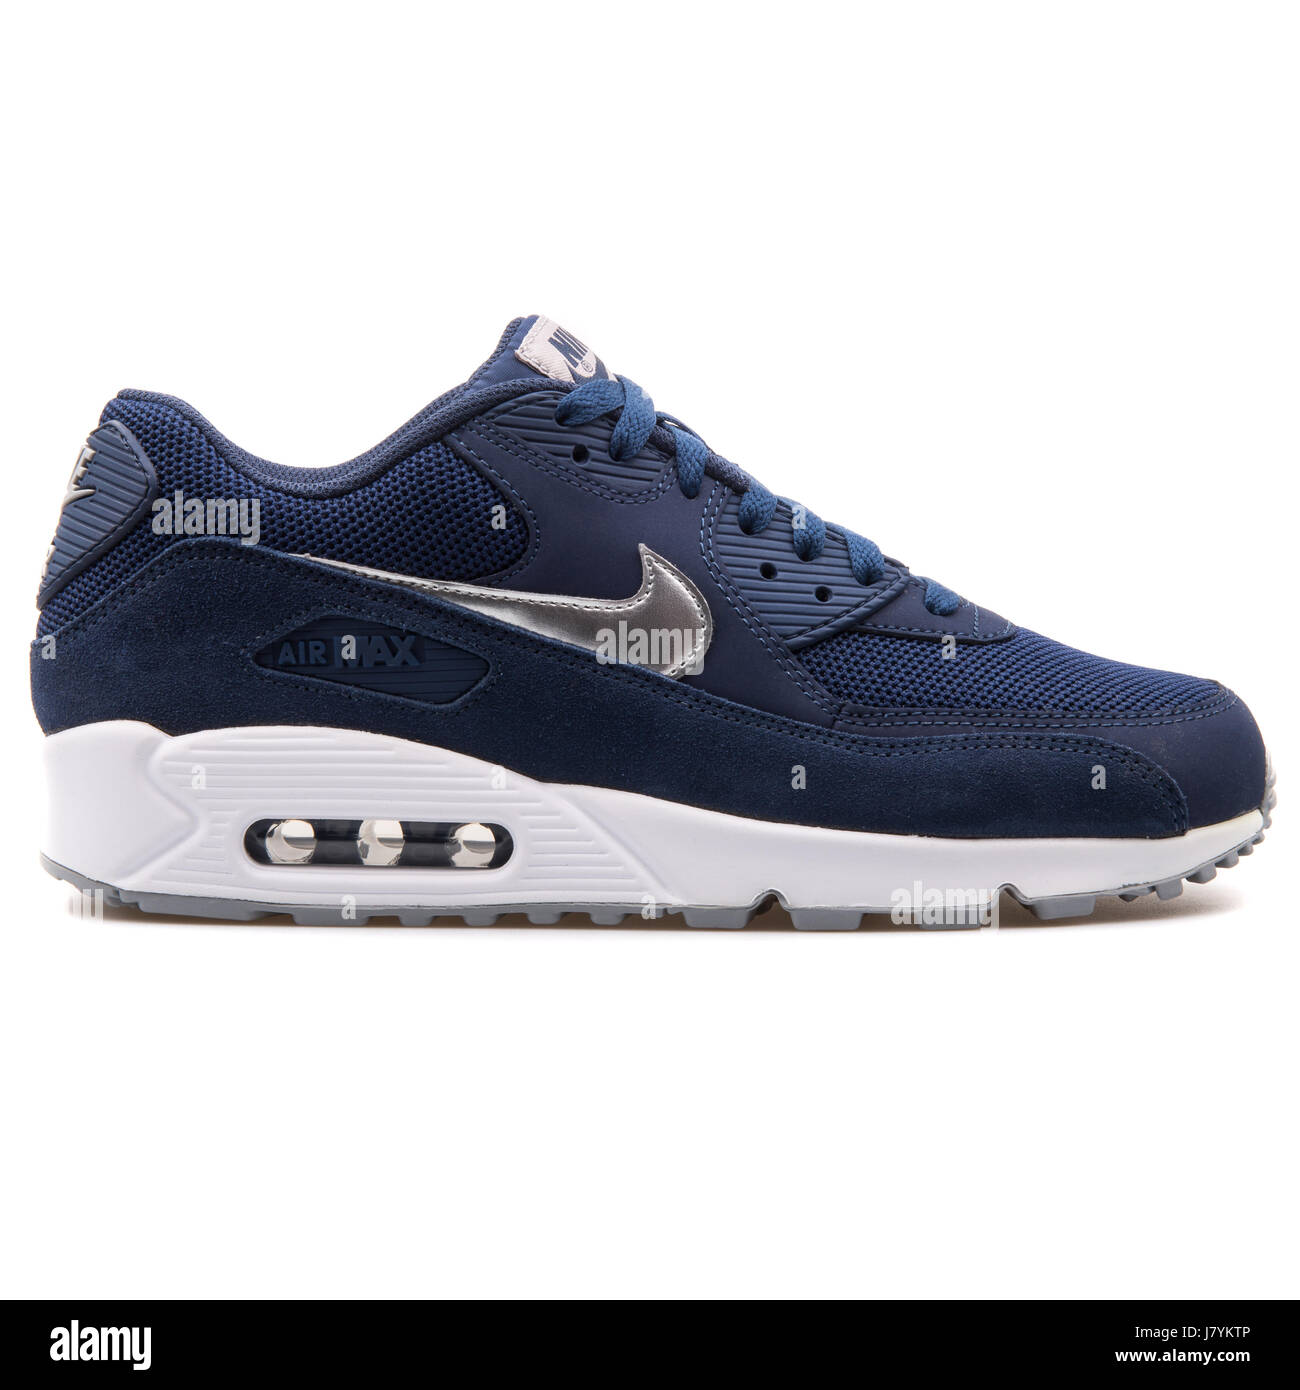 Nike Air max 90 chaussures de sport hommes bleu essentiel - 537384-411  Photo Stock - Alamy